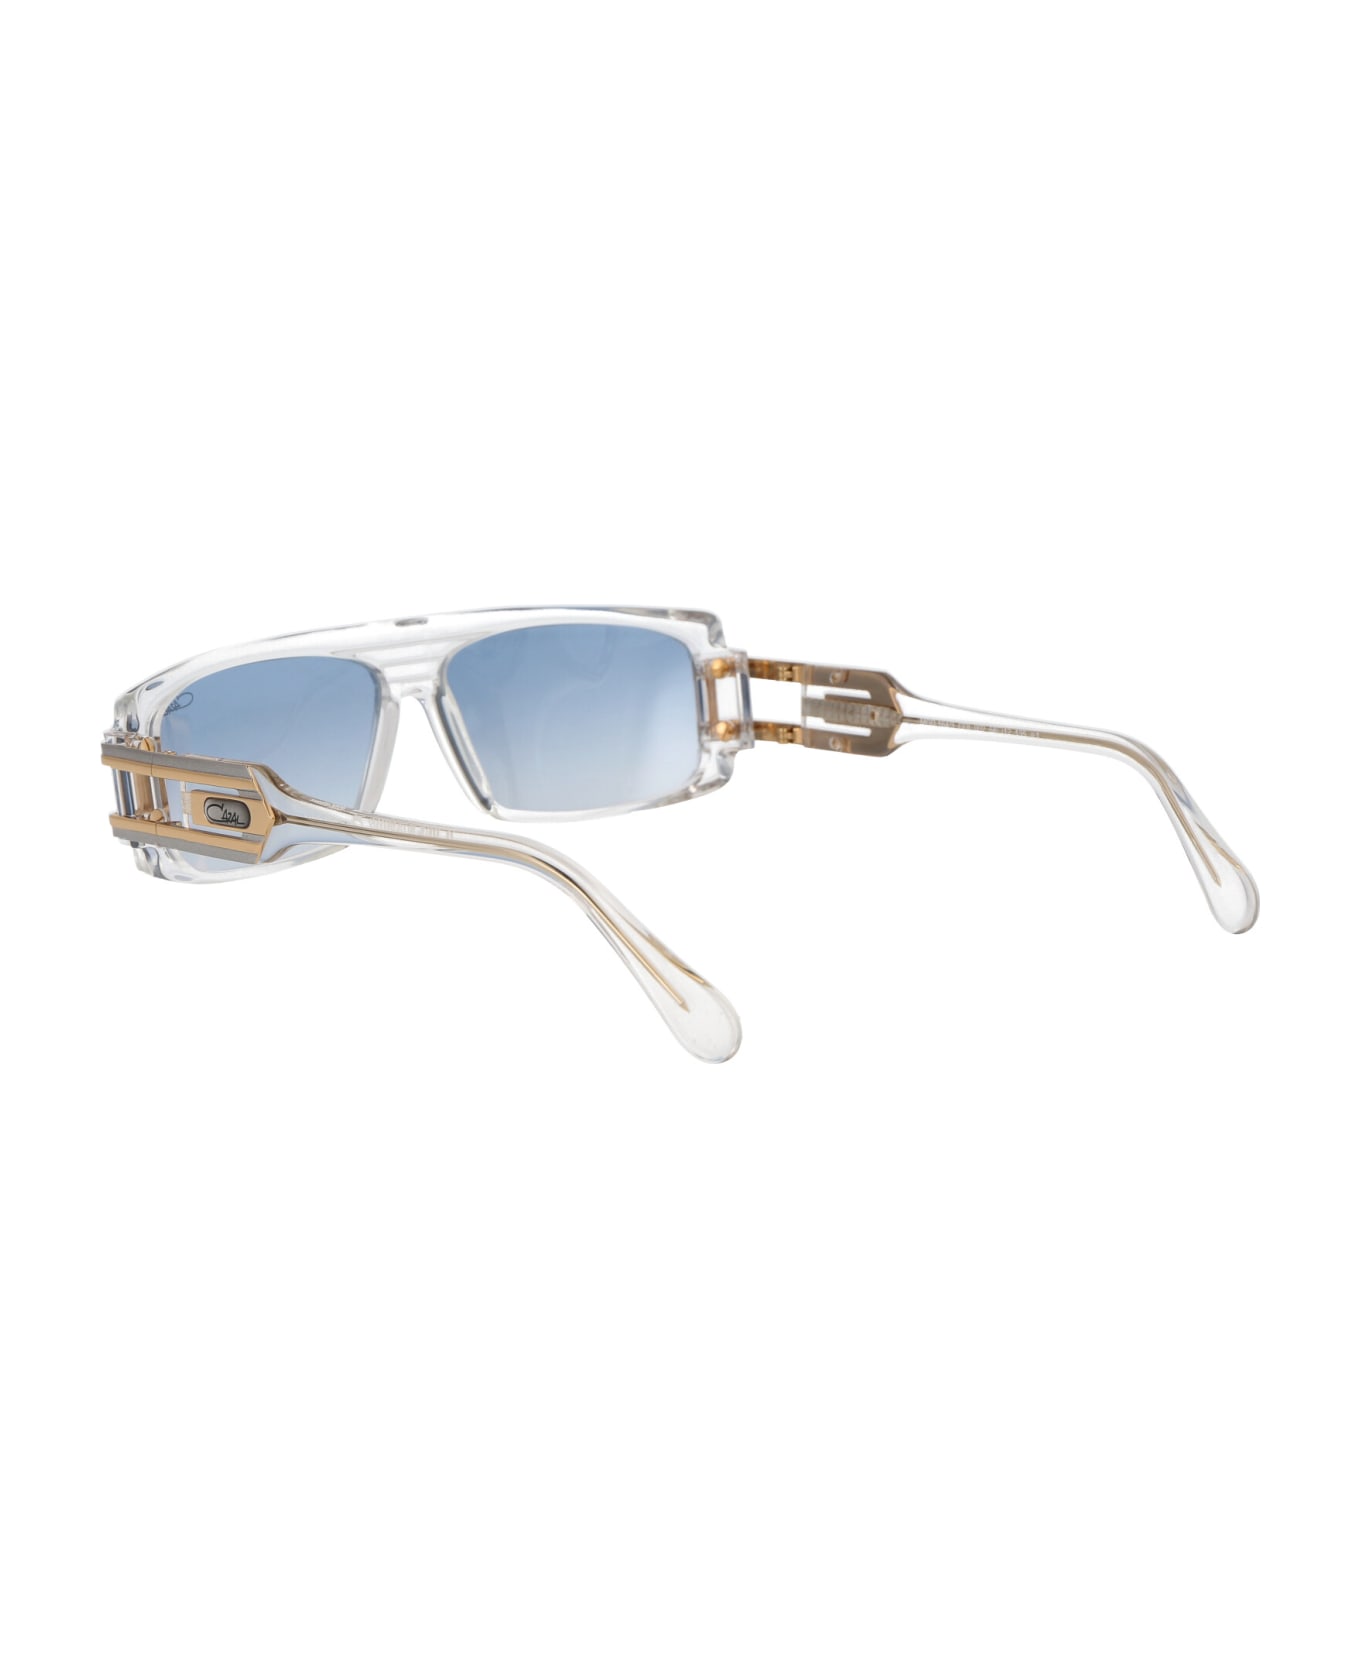 Cazal Mod. 164/3 Sunglasses - 002 CRYSTAL サングラス